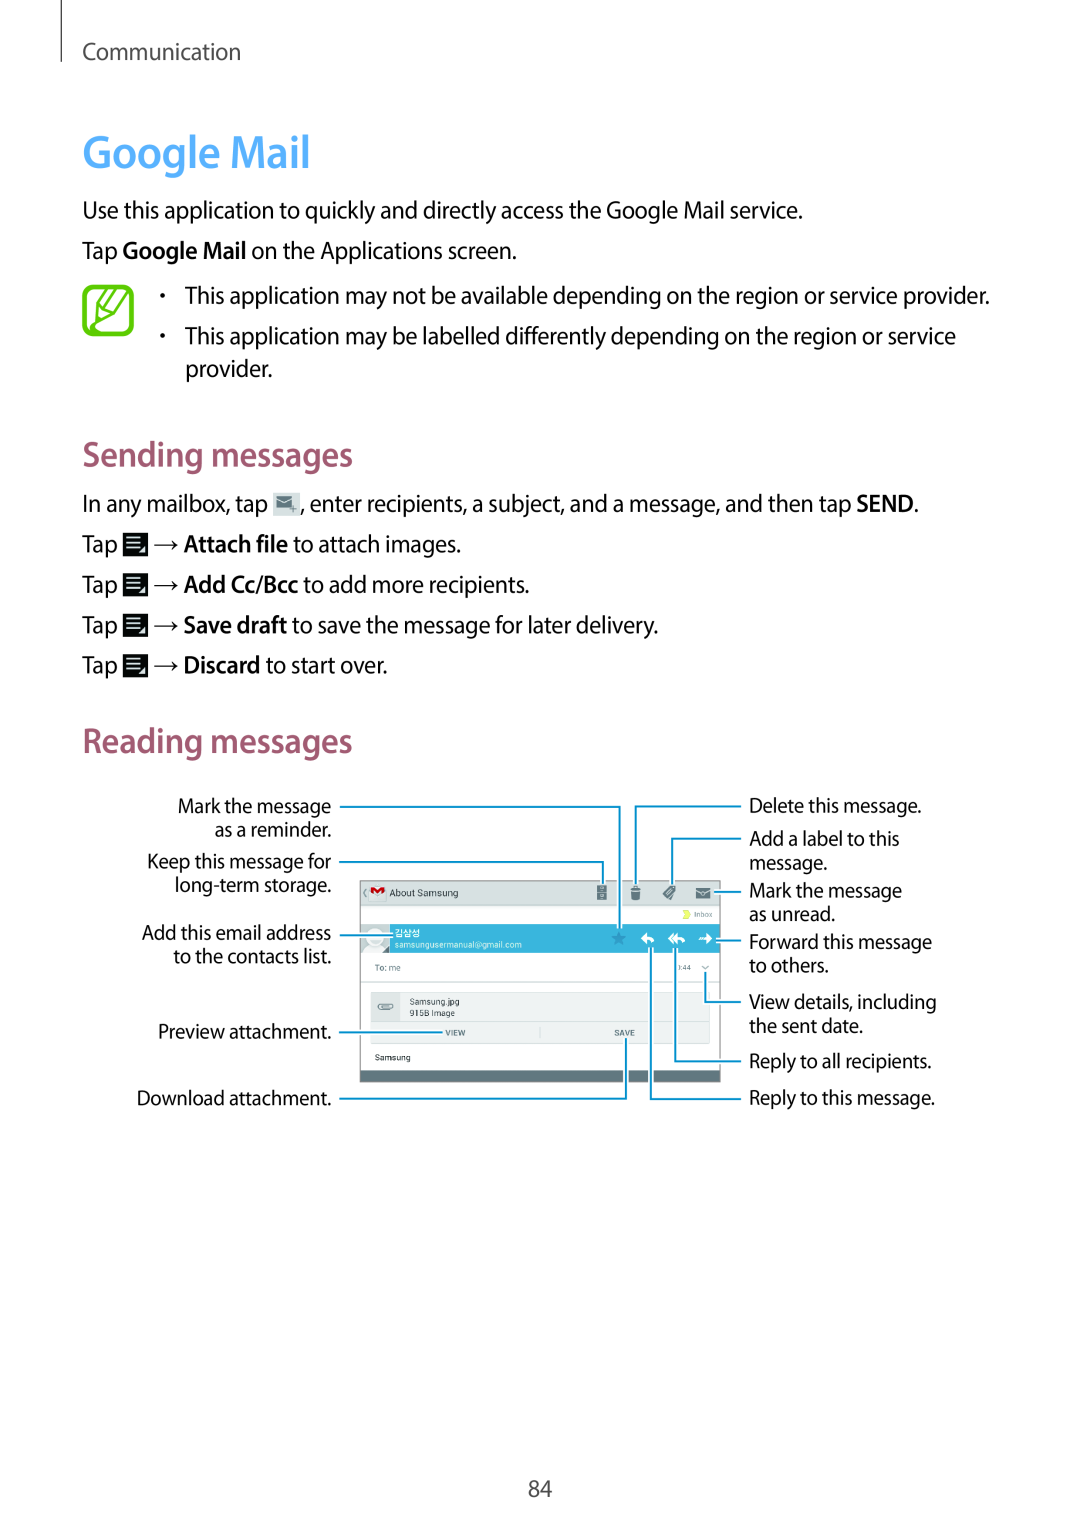 Samsung EK-GC100 user manual Google Mail, Sending messages, Reading messages, Communication 